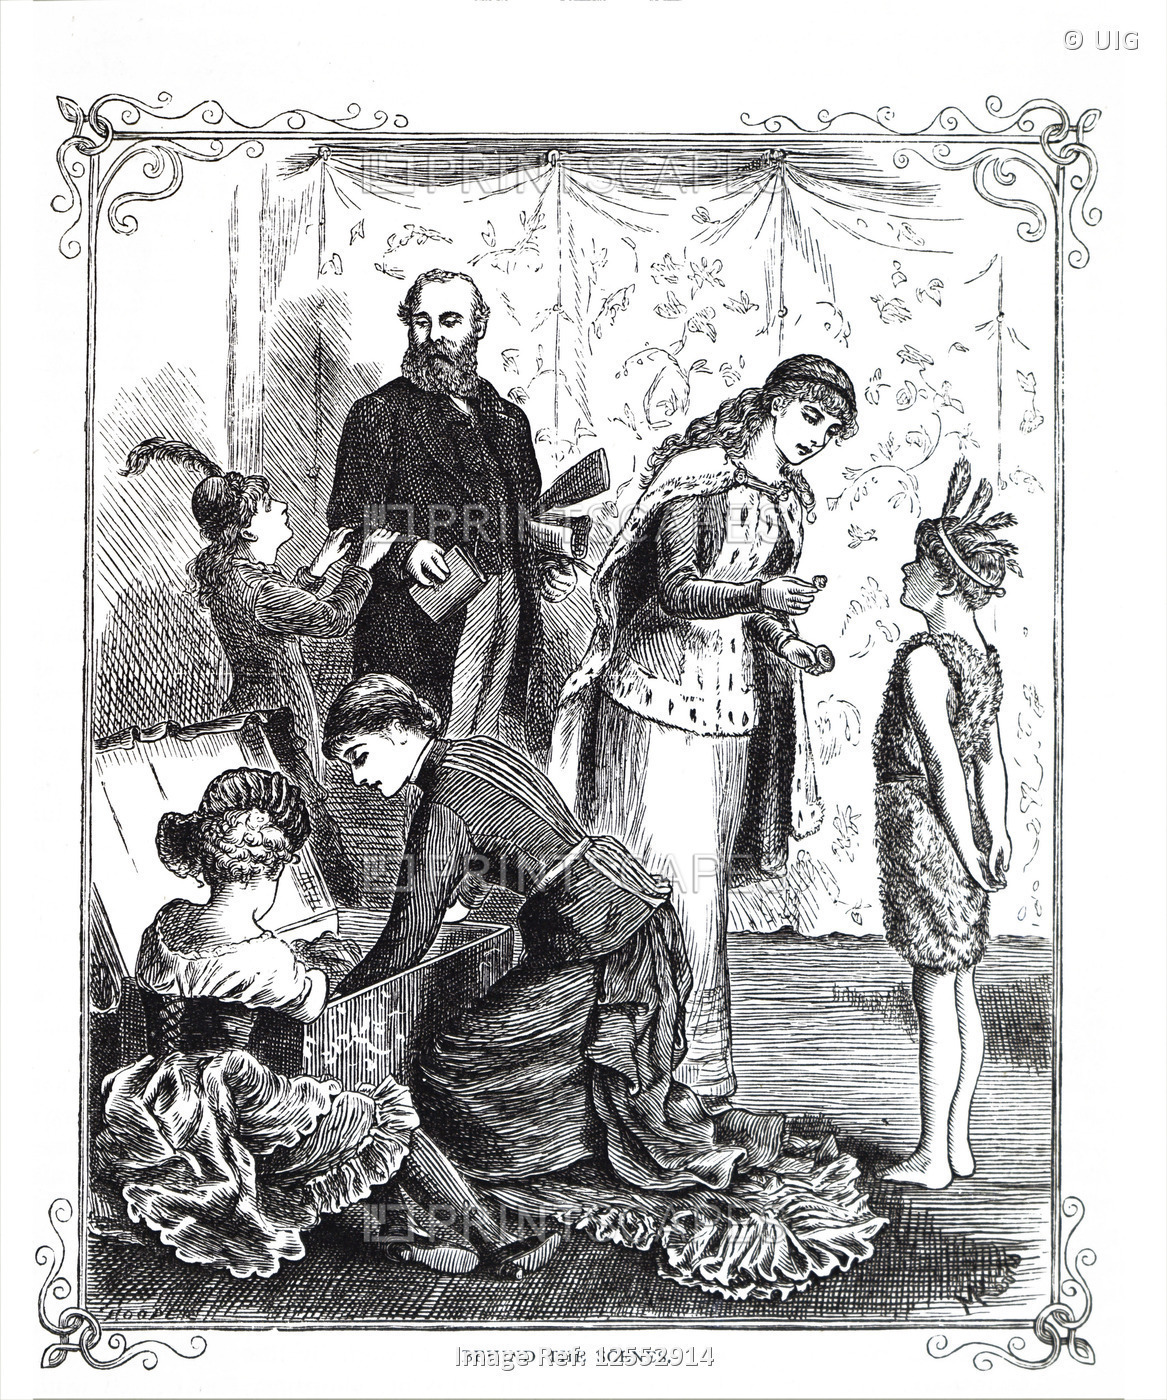 Illustration depicting children playing dress-up, 19th century